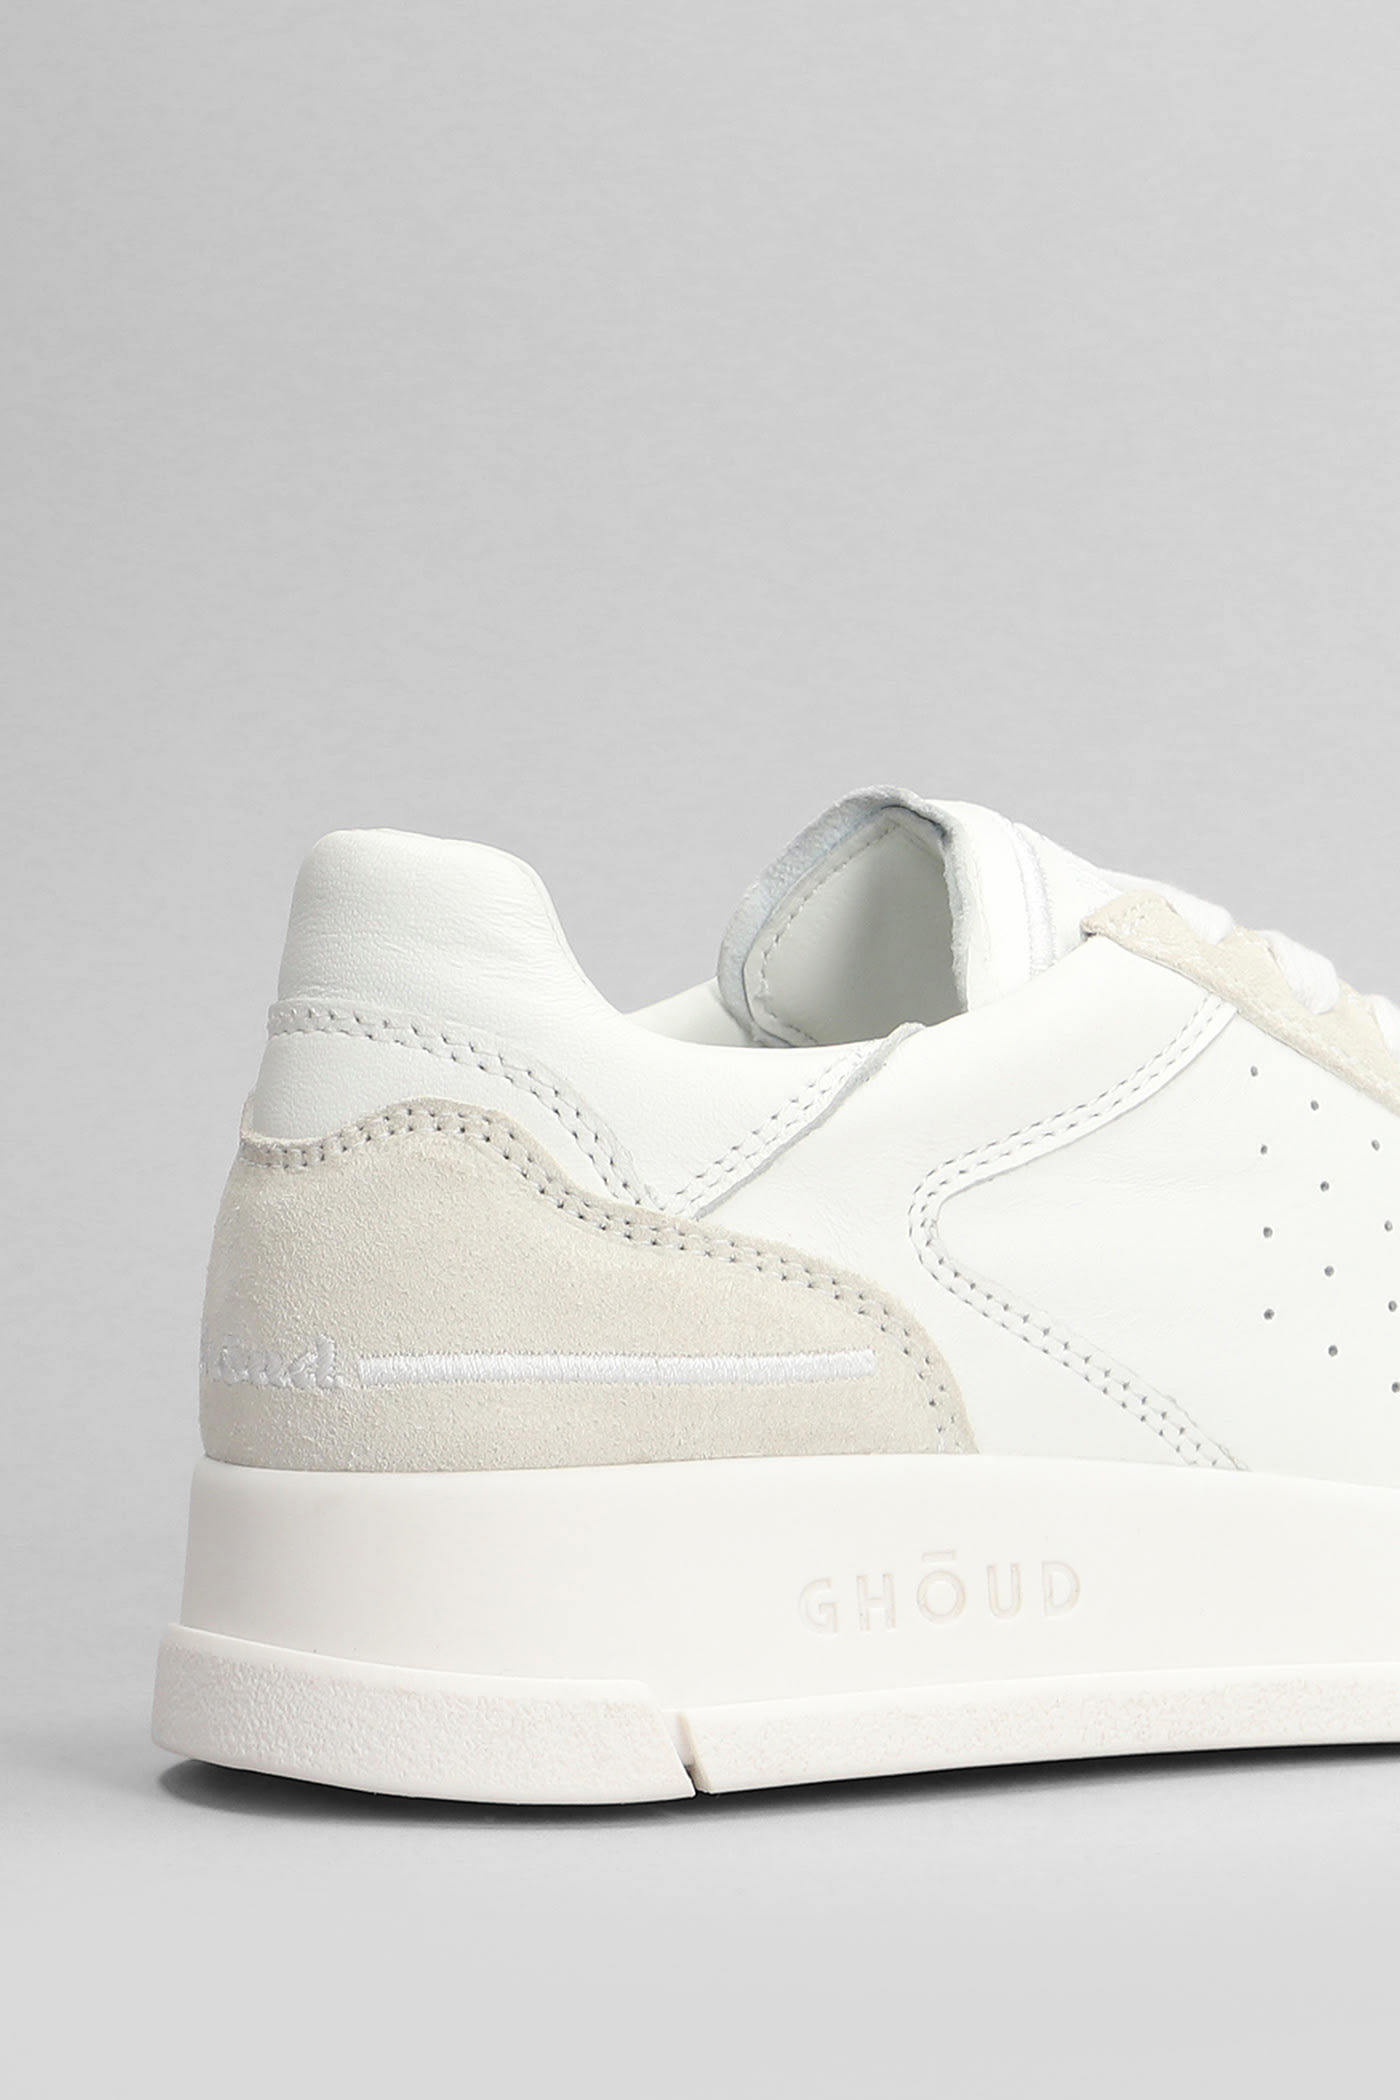 Shop Ghoud Tweener Low Sneakers In White Suede And Leather